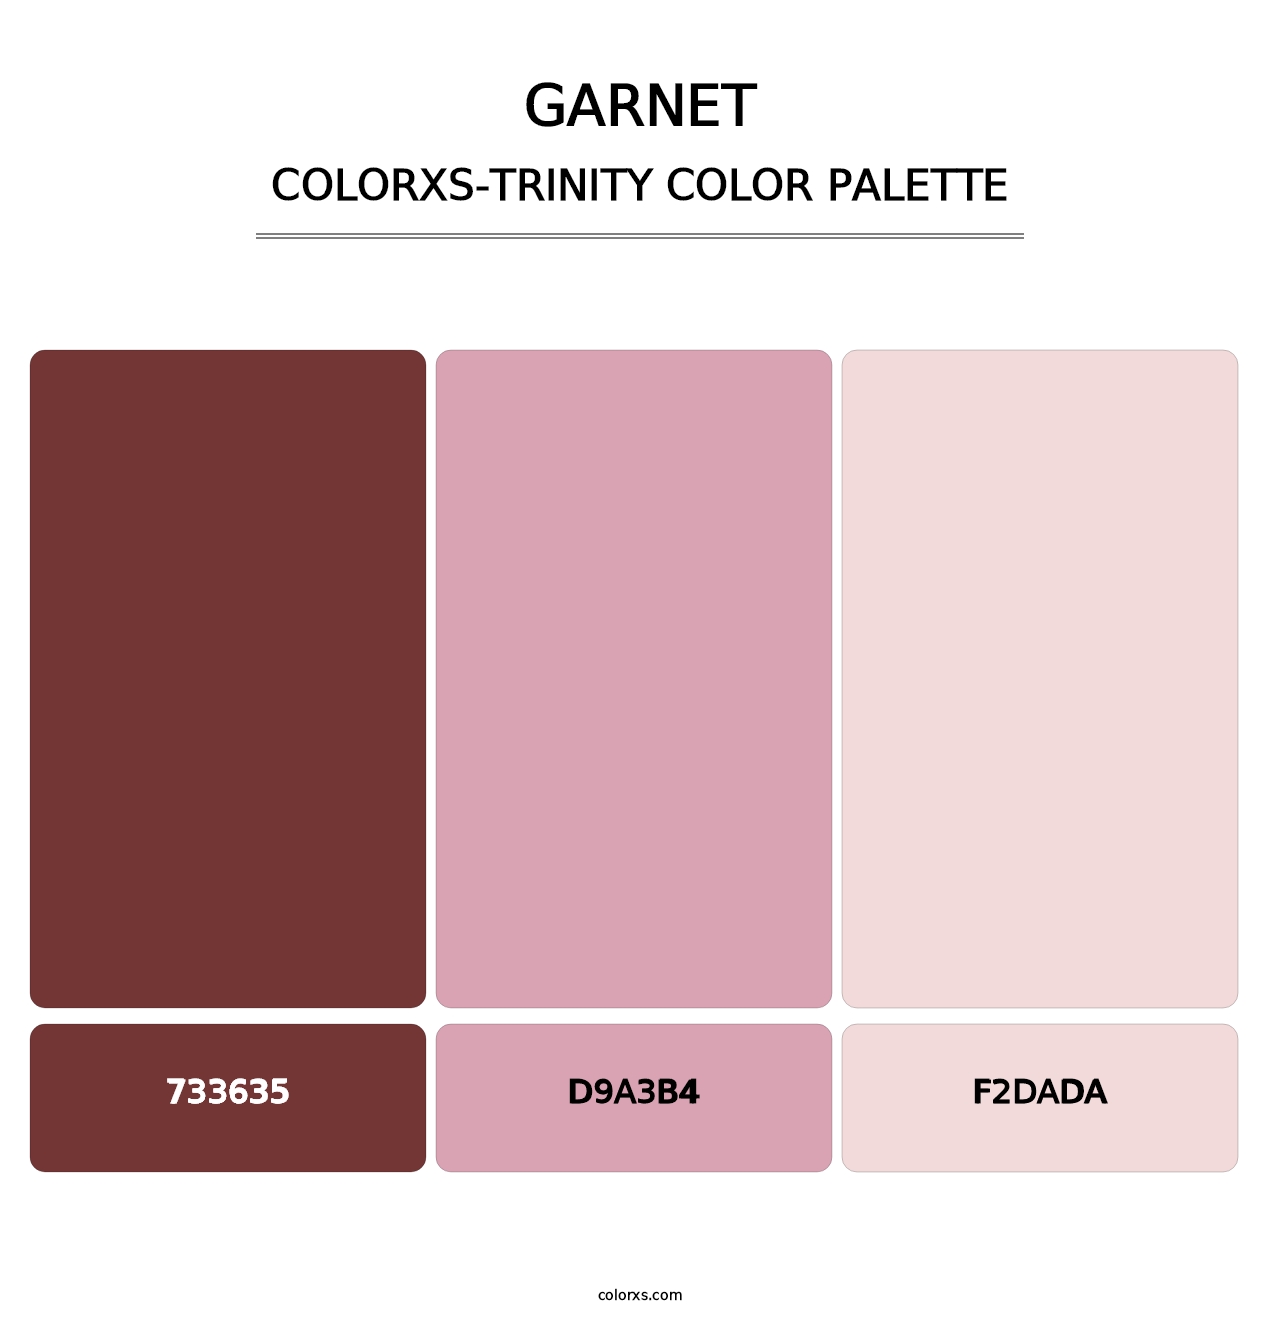 Garnet - Colorxs Trinity Palette